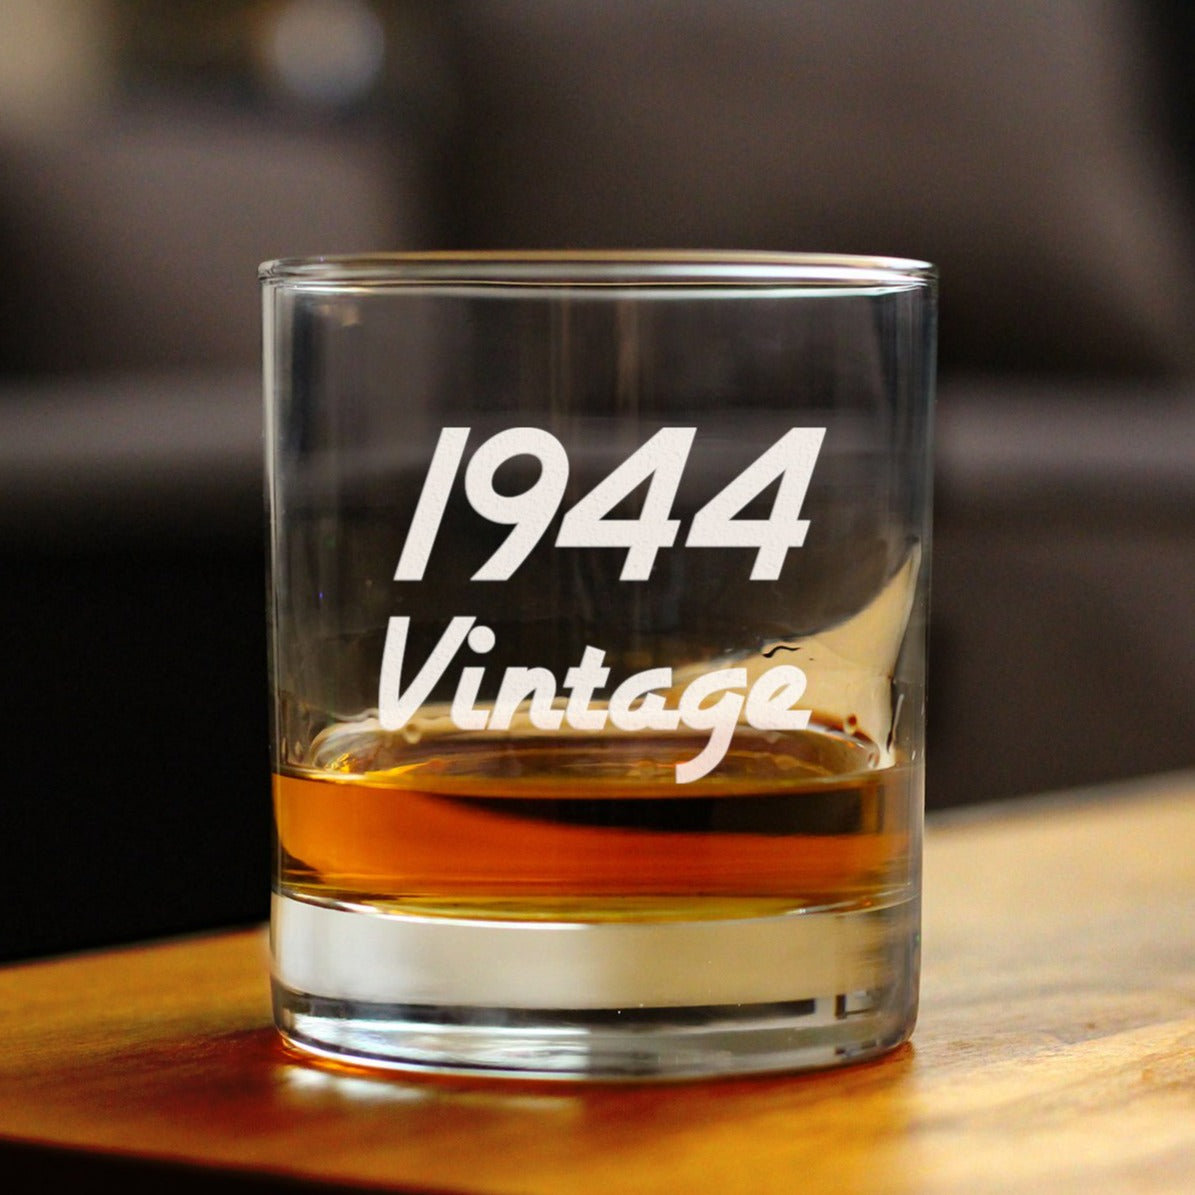 Vintage 1944 - Fun 80th Birthday Whiskey Rocks Glass Gifts for Men &amp; Women Turning 80 - Retro Whisky Drinking Tumbler